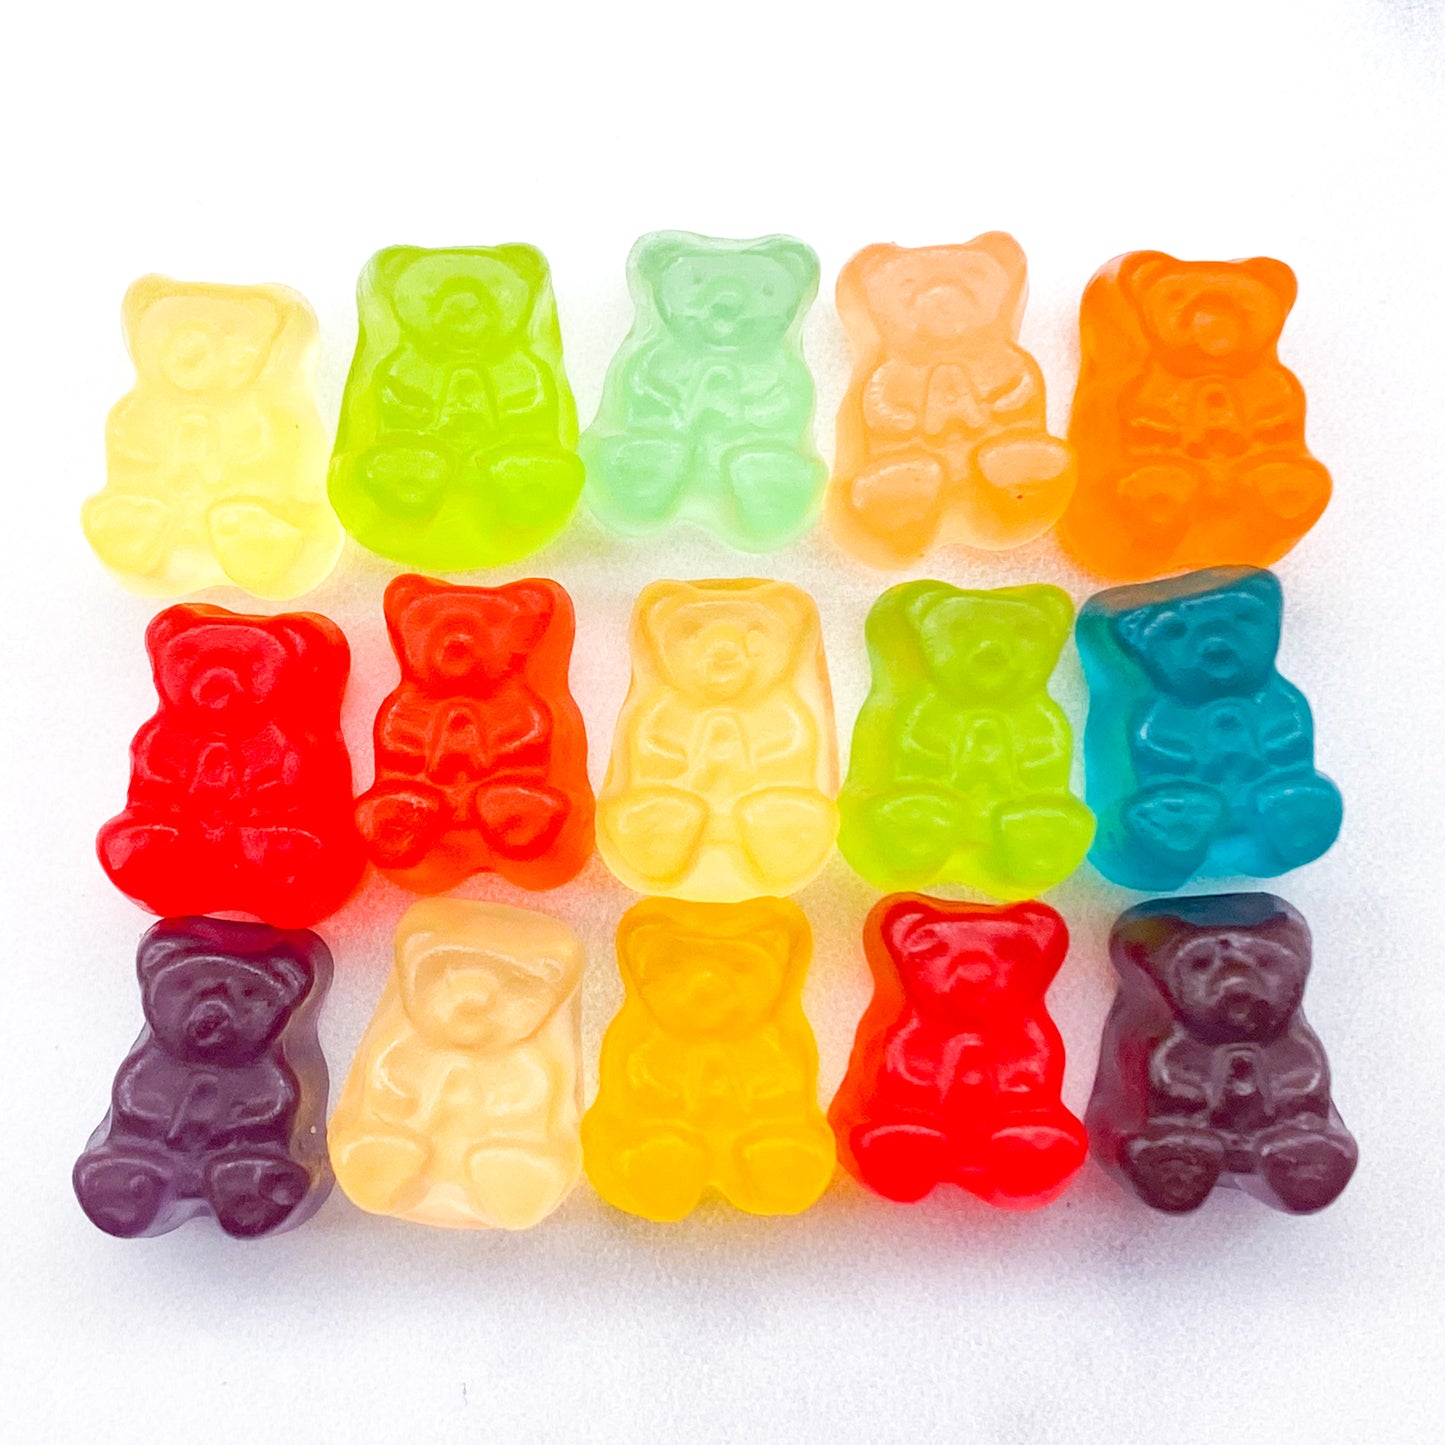 Gummi Bears - 12 Flavor